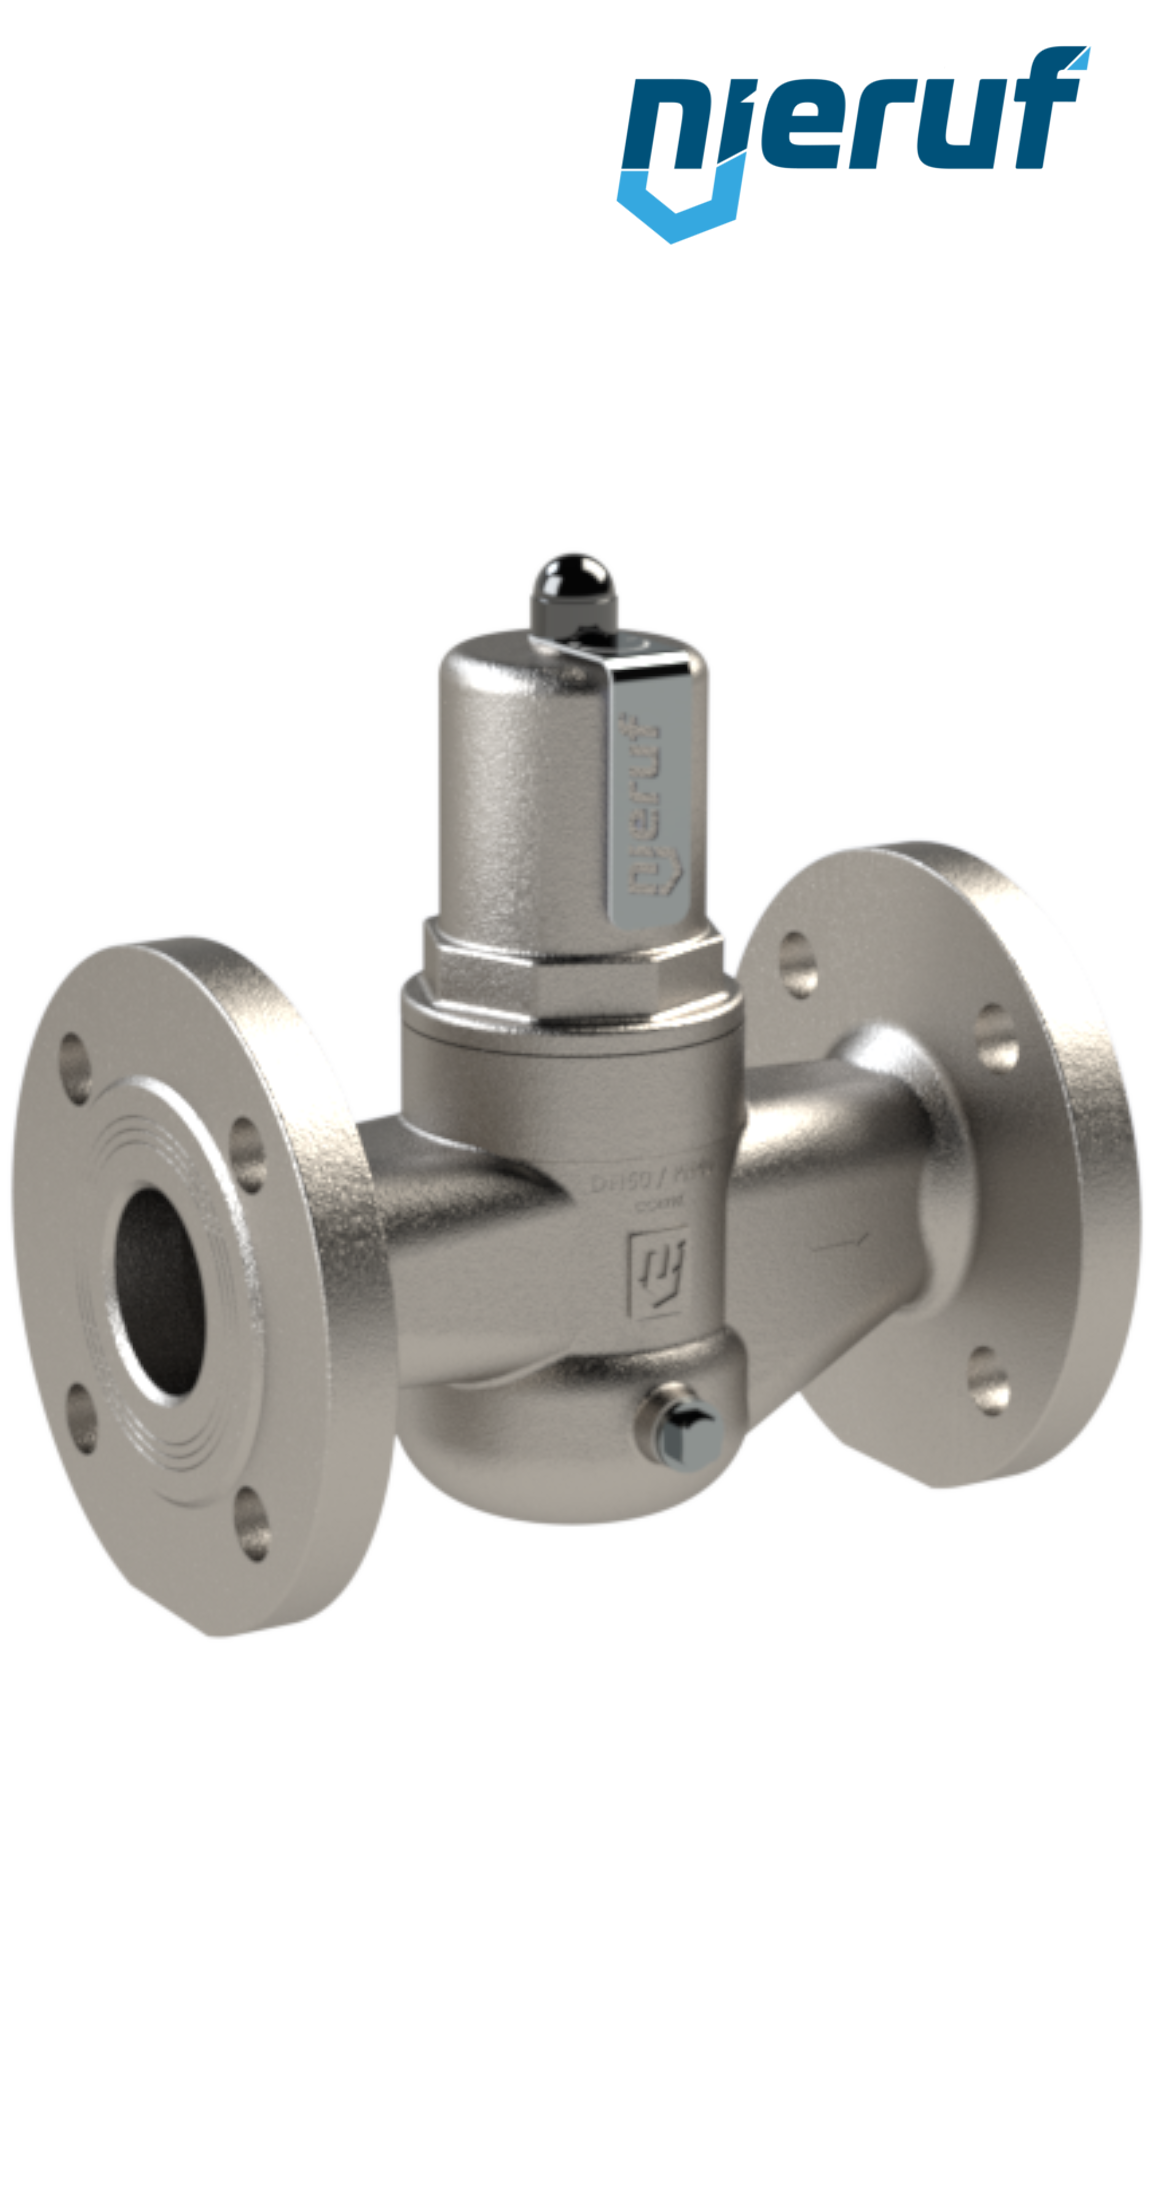 Flange-pressure reducing valve DN 40 PN40 DM08 stainless steel FKM 5.0 - 15.0 bar